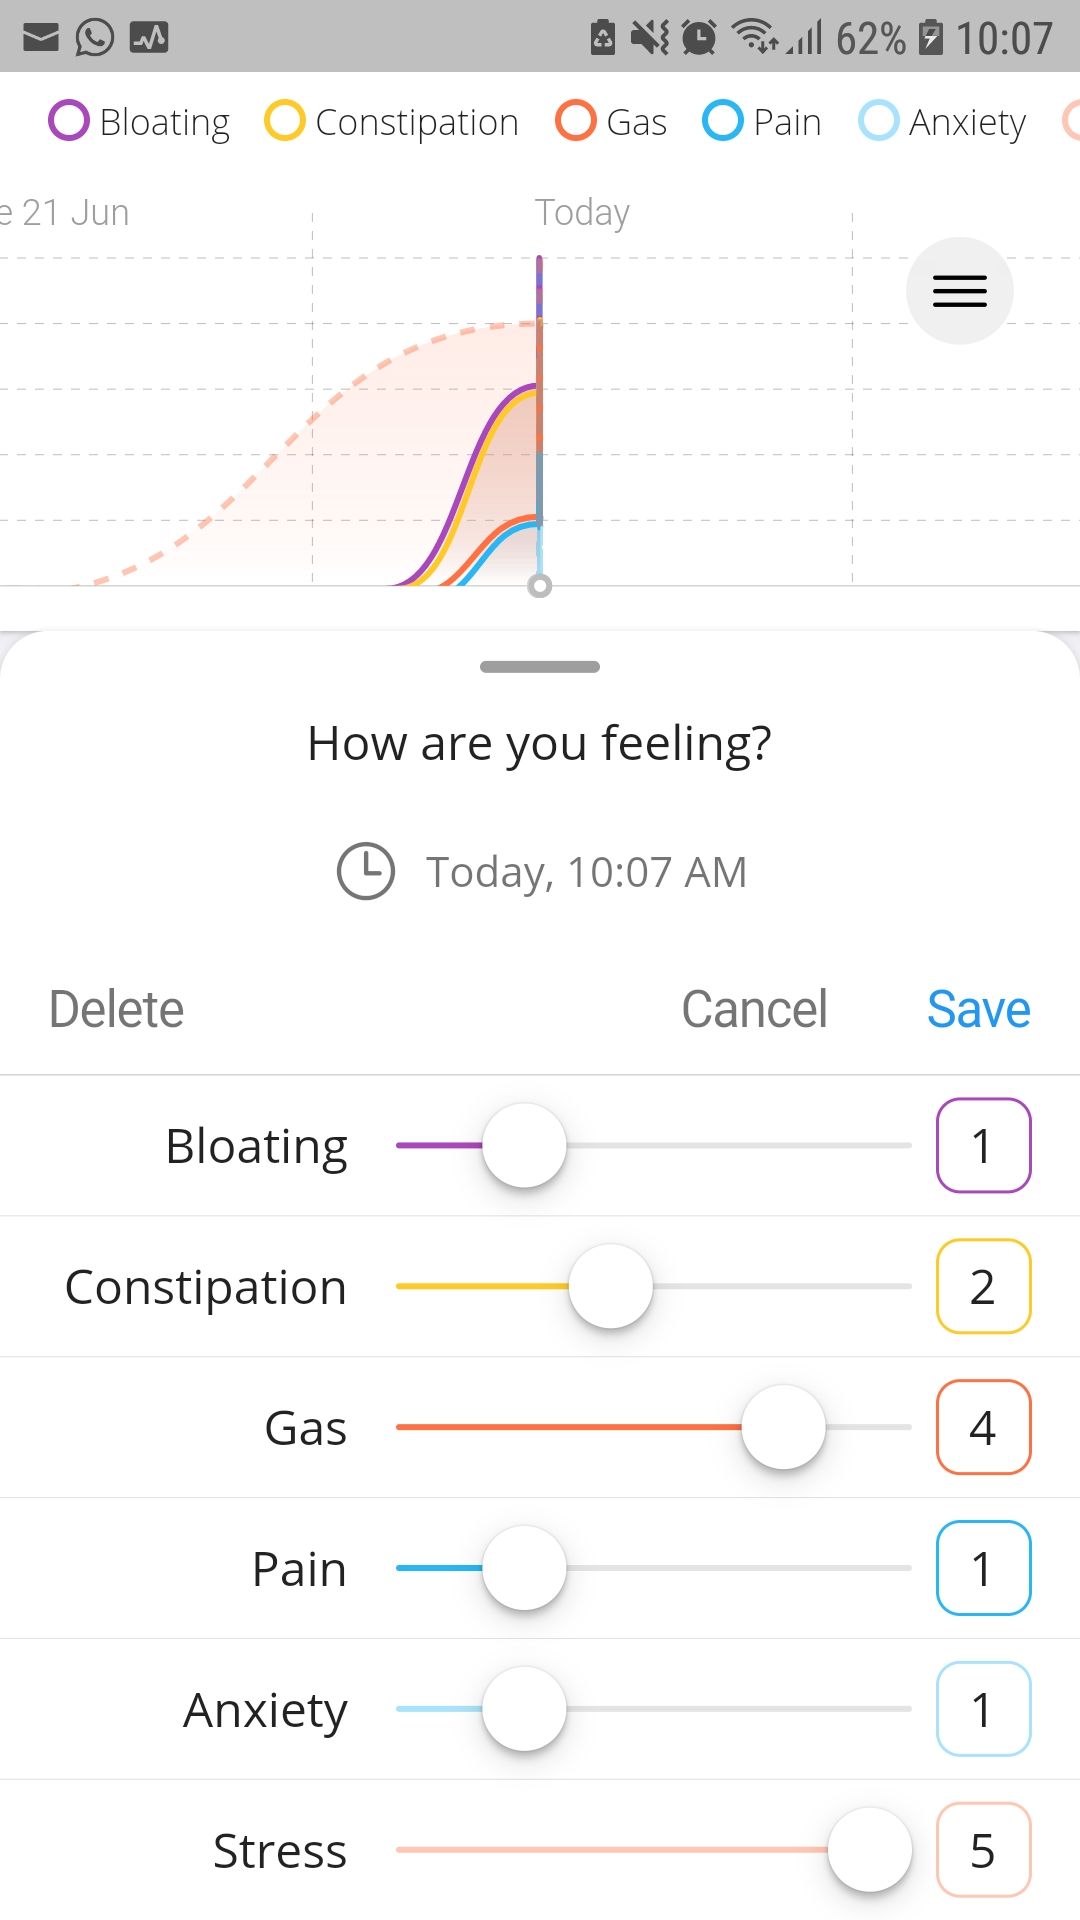 Endive mobile gut health app feelings and symptoms